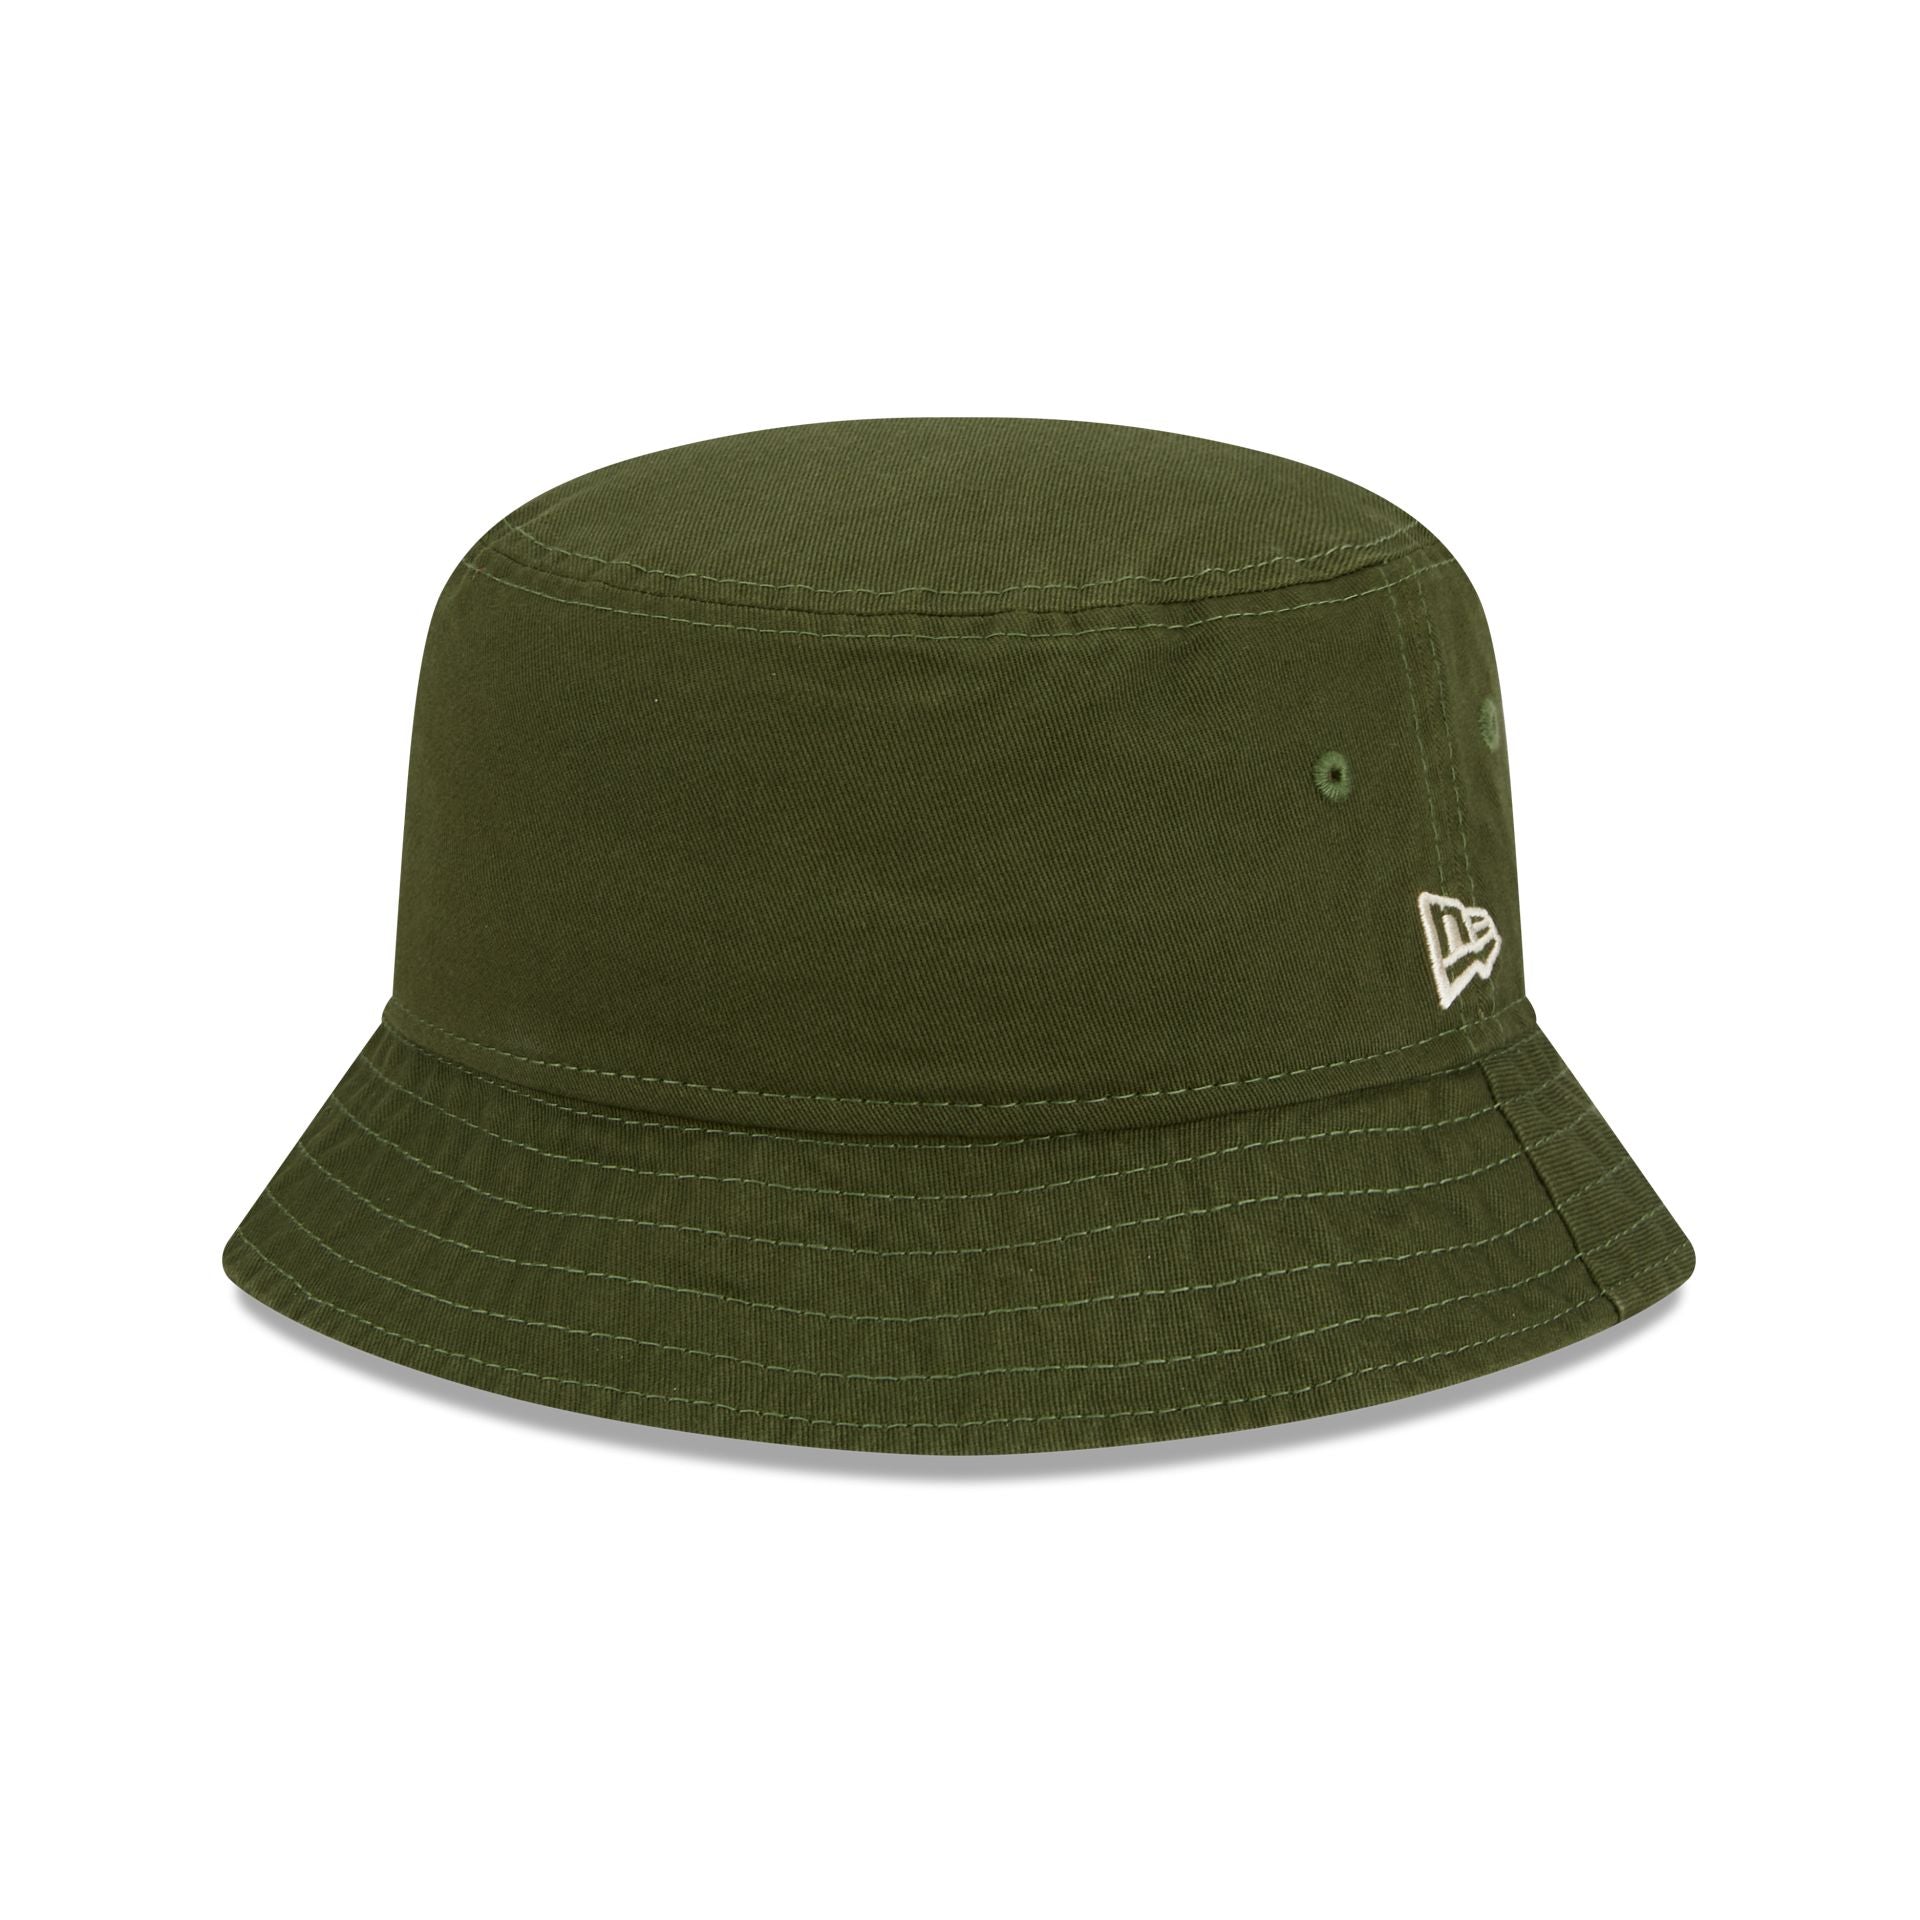 New Era Everyday Classics Rifle Green Bucket Hat - Size: M, by New Era